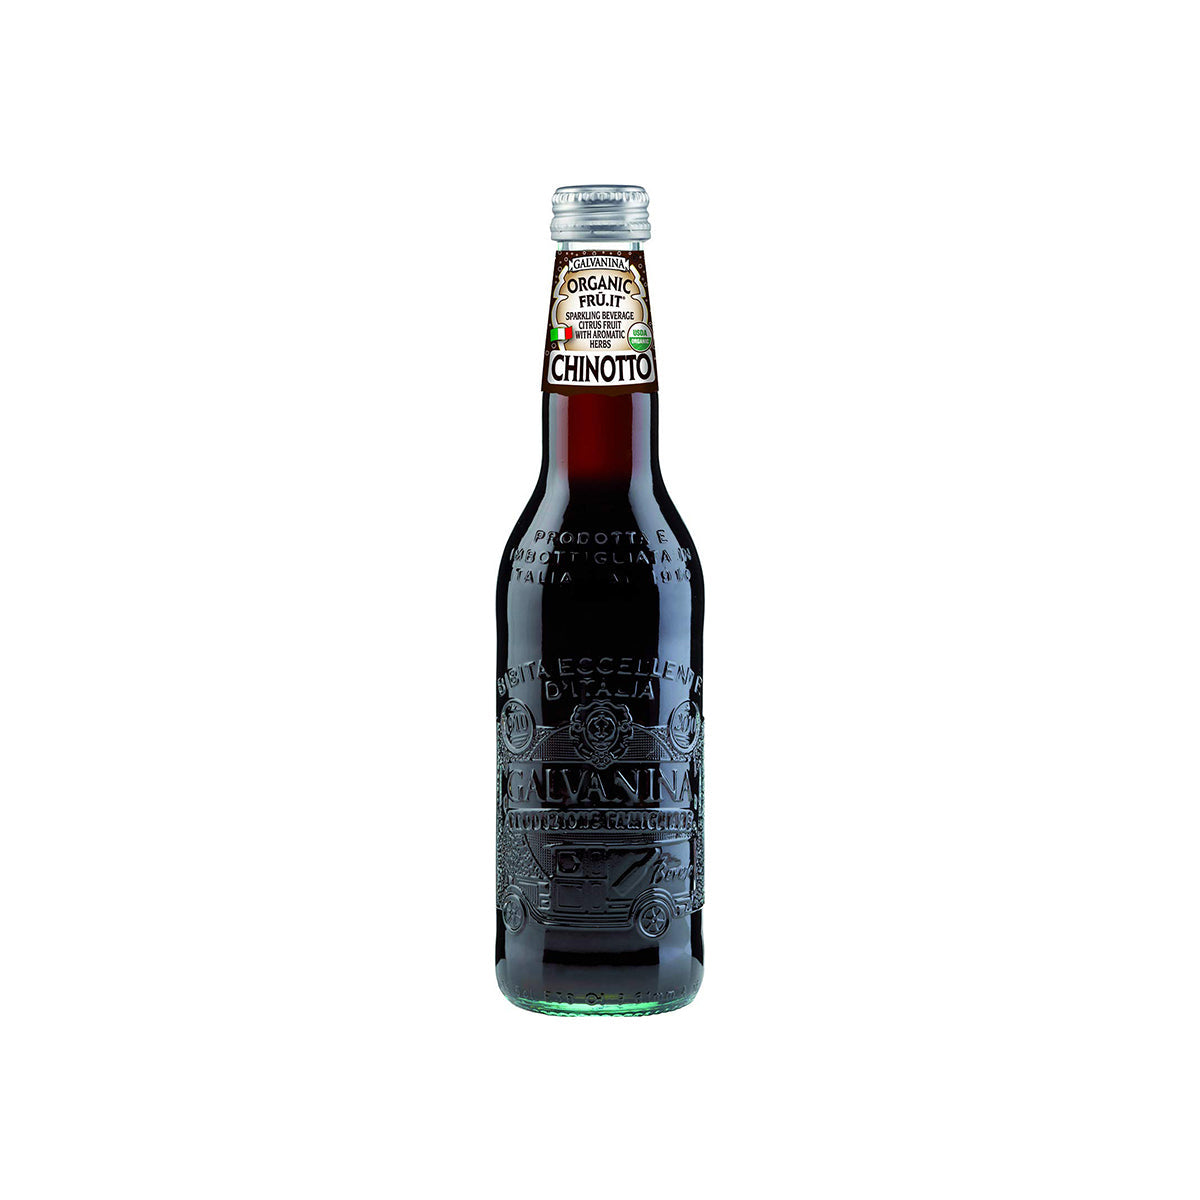 Galvanina Organic Chinotto Soda 12 Oz Bottle - 12 Ct